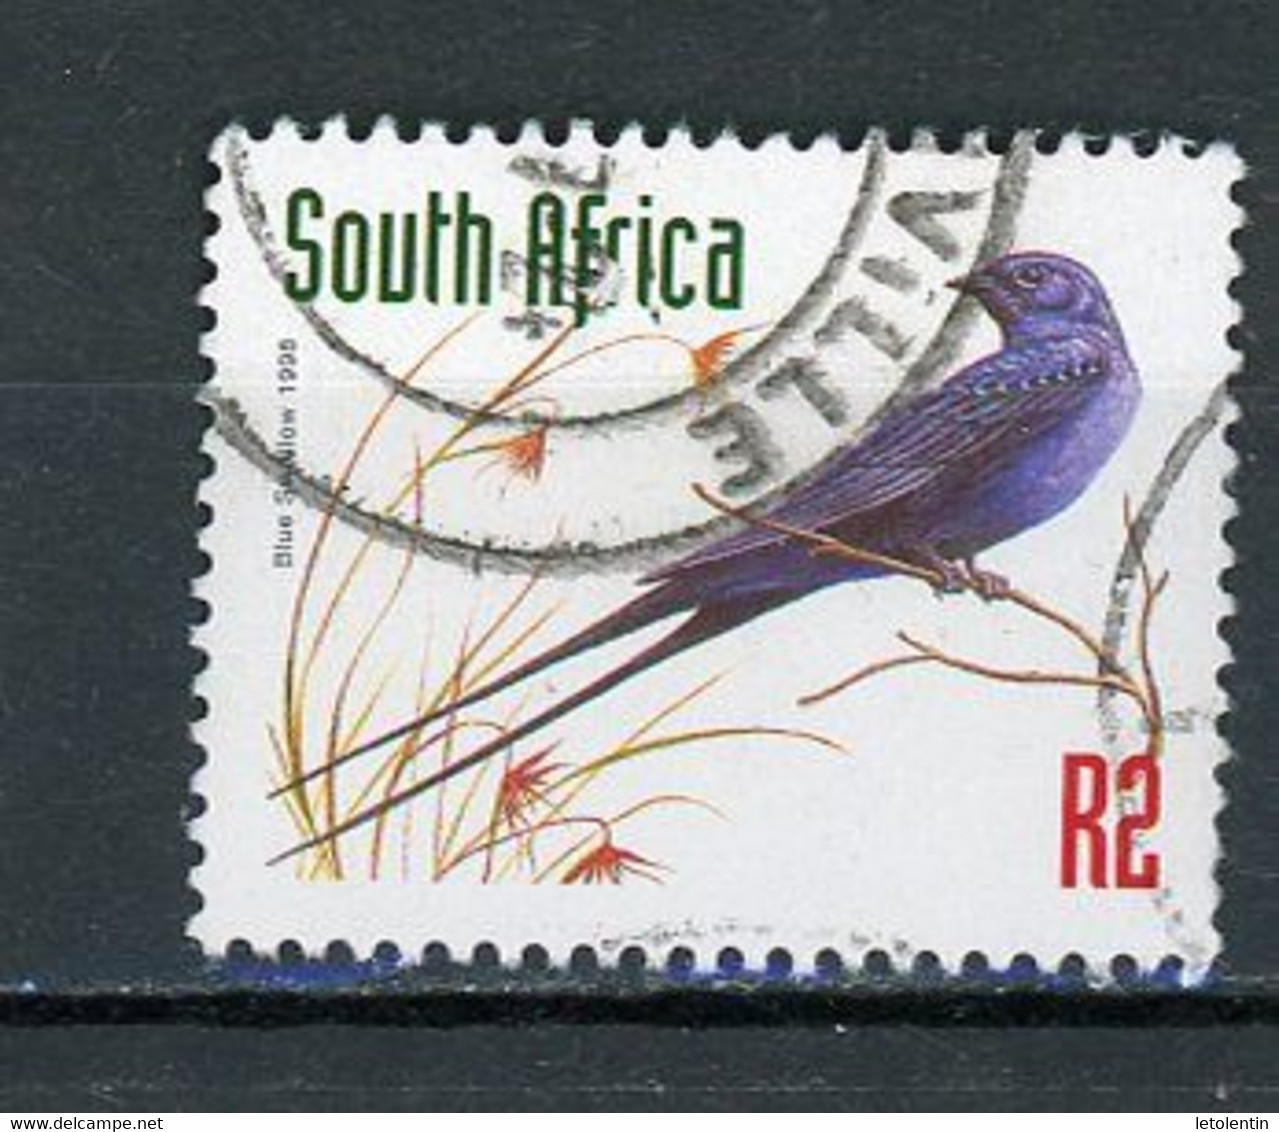 AFRIQUE DU SUD : FAUNE  - N° Yvert 1017a Obli. - Used Stamps